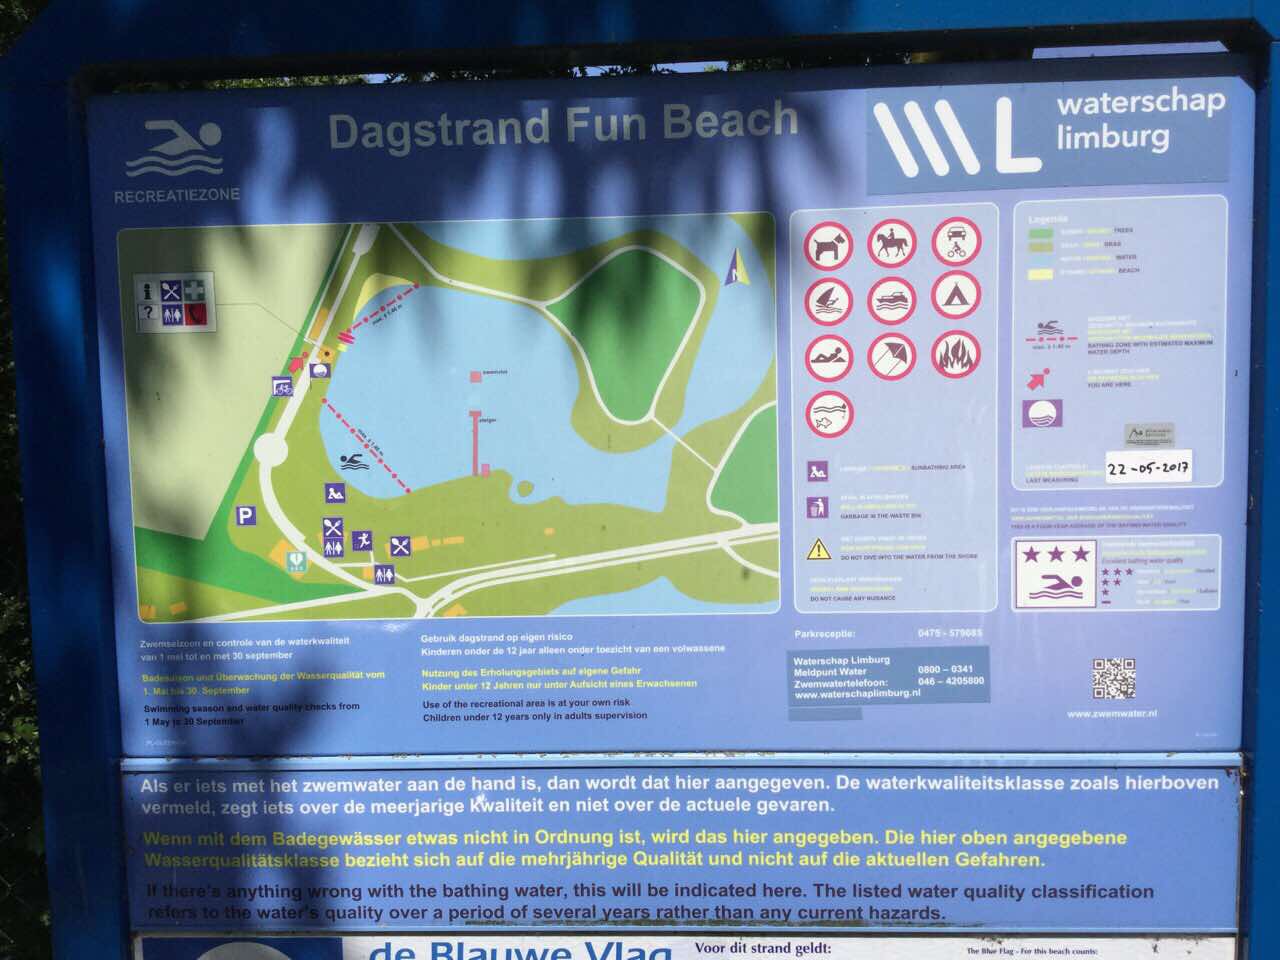 The information board at the swimming location Dagstrand Fun Beach